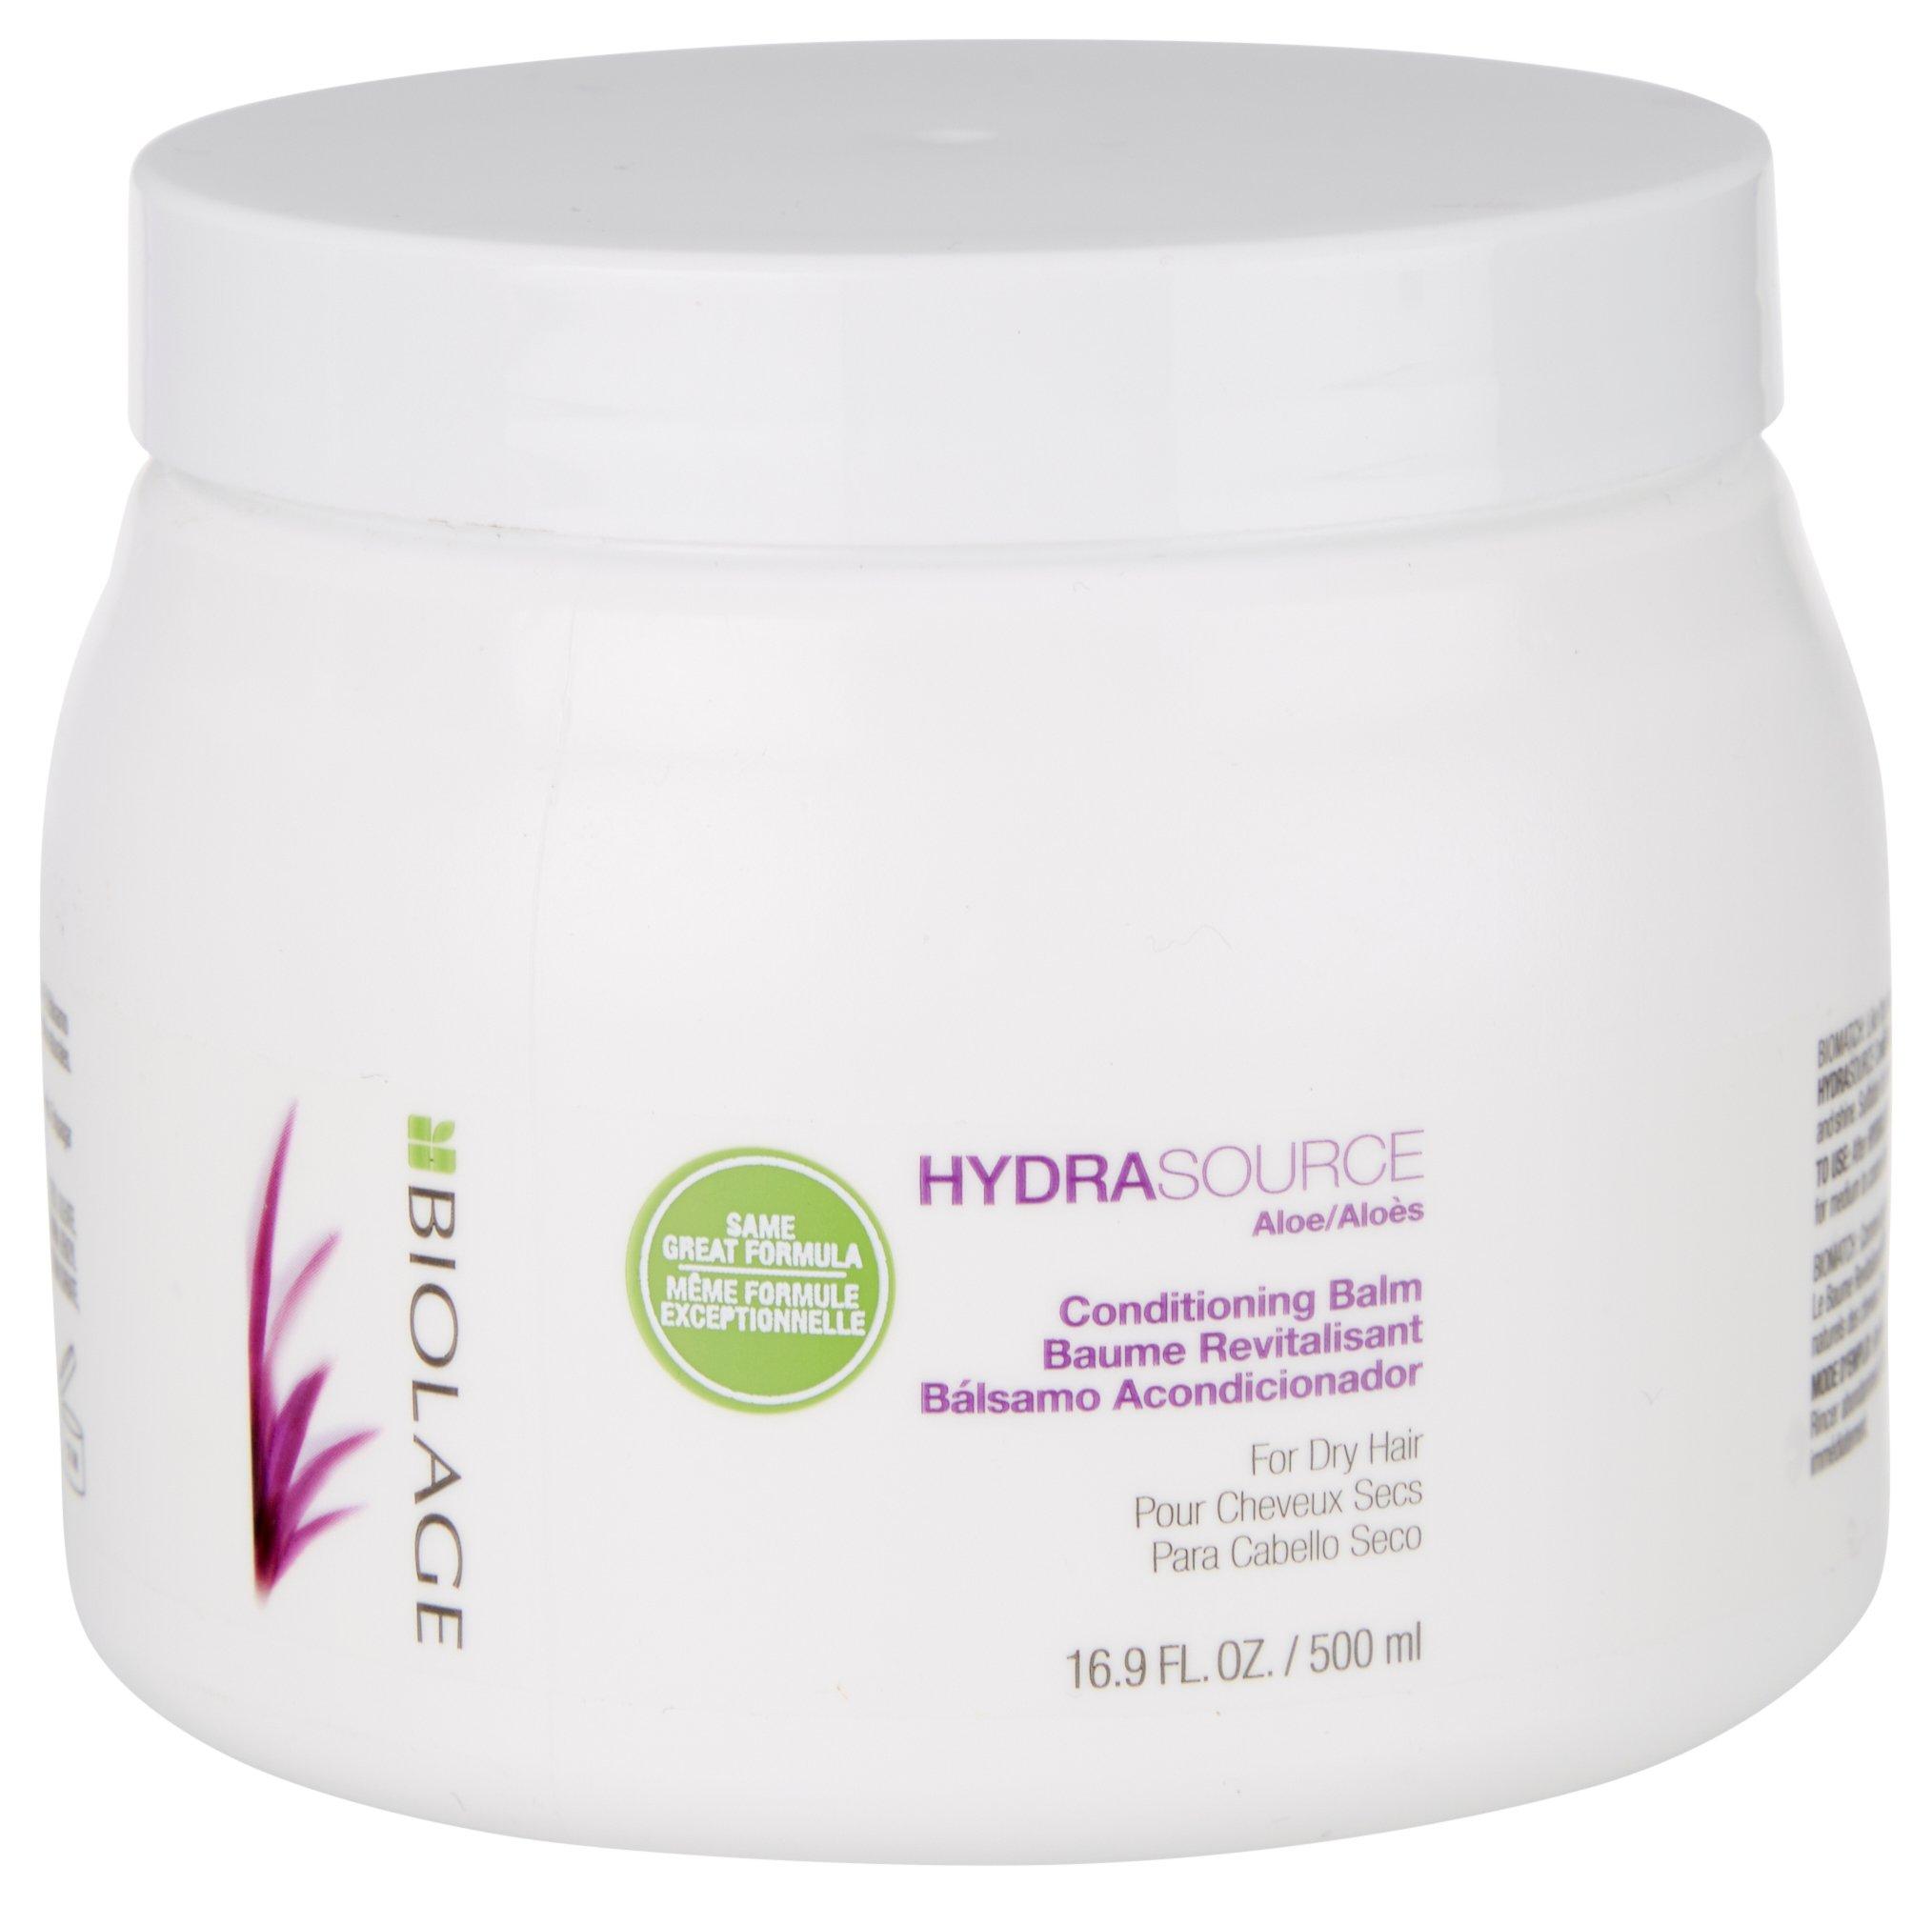 HydraSource 16.9 Fl.Oz. Dry Hair Conditioning Balm